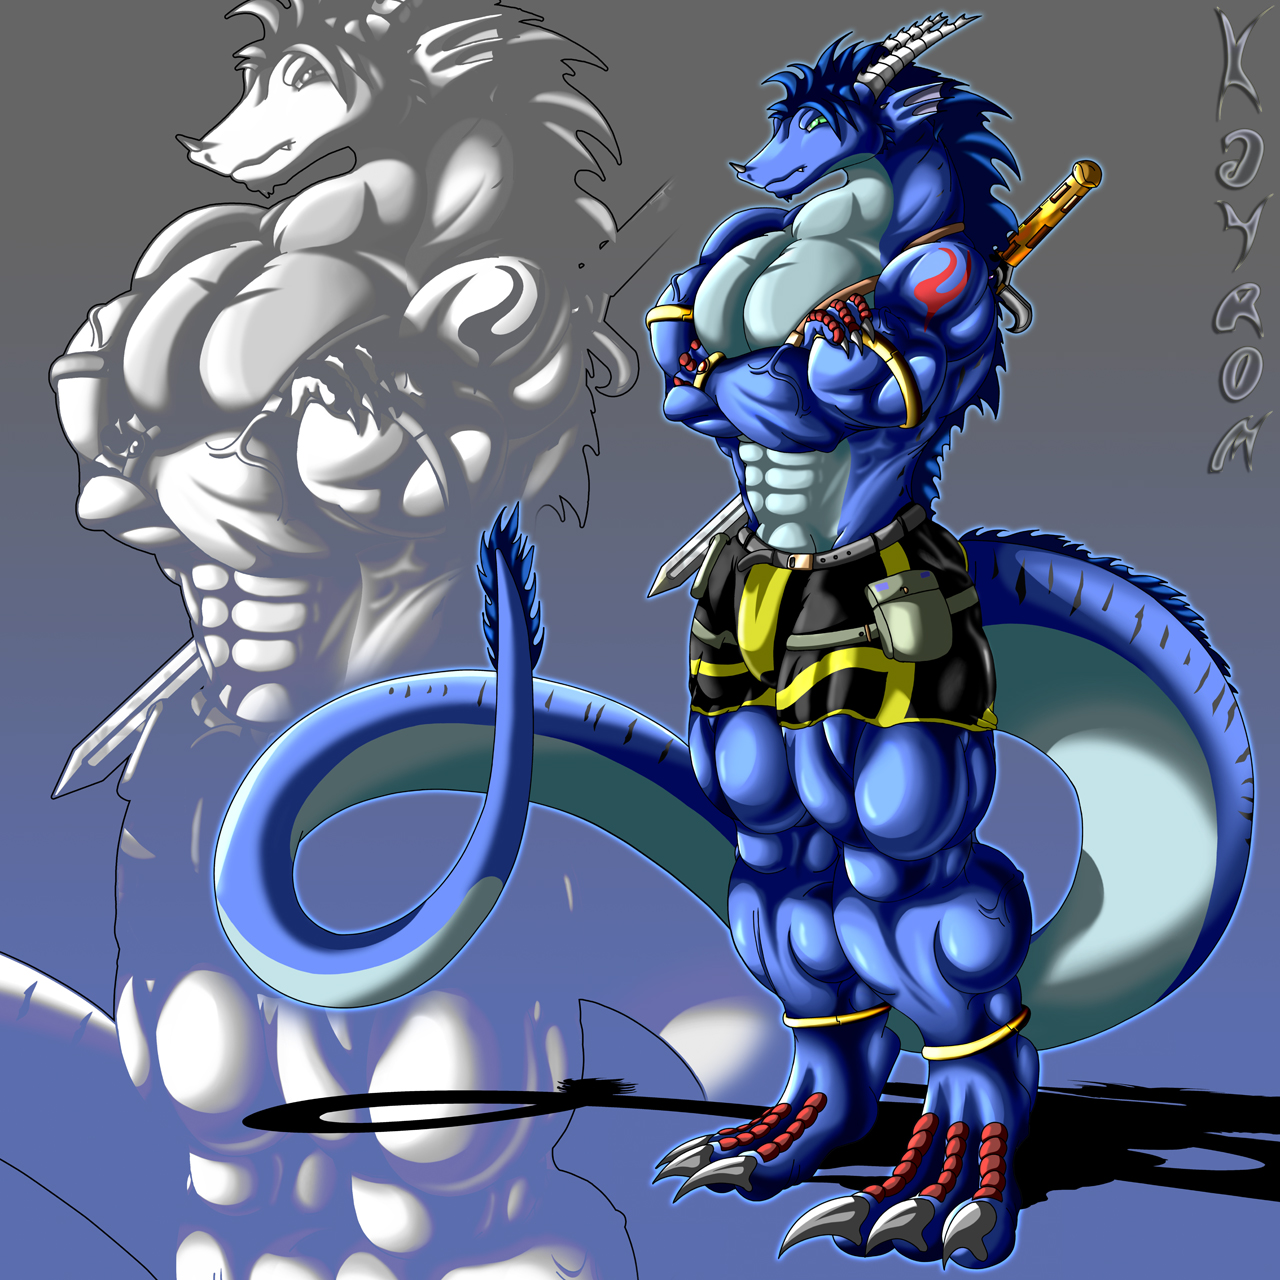 Threattening and muscular dragon- the blue dragon Kayrom. 